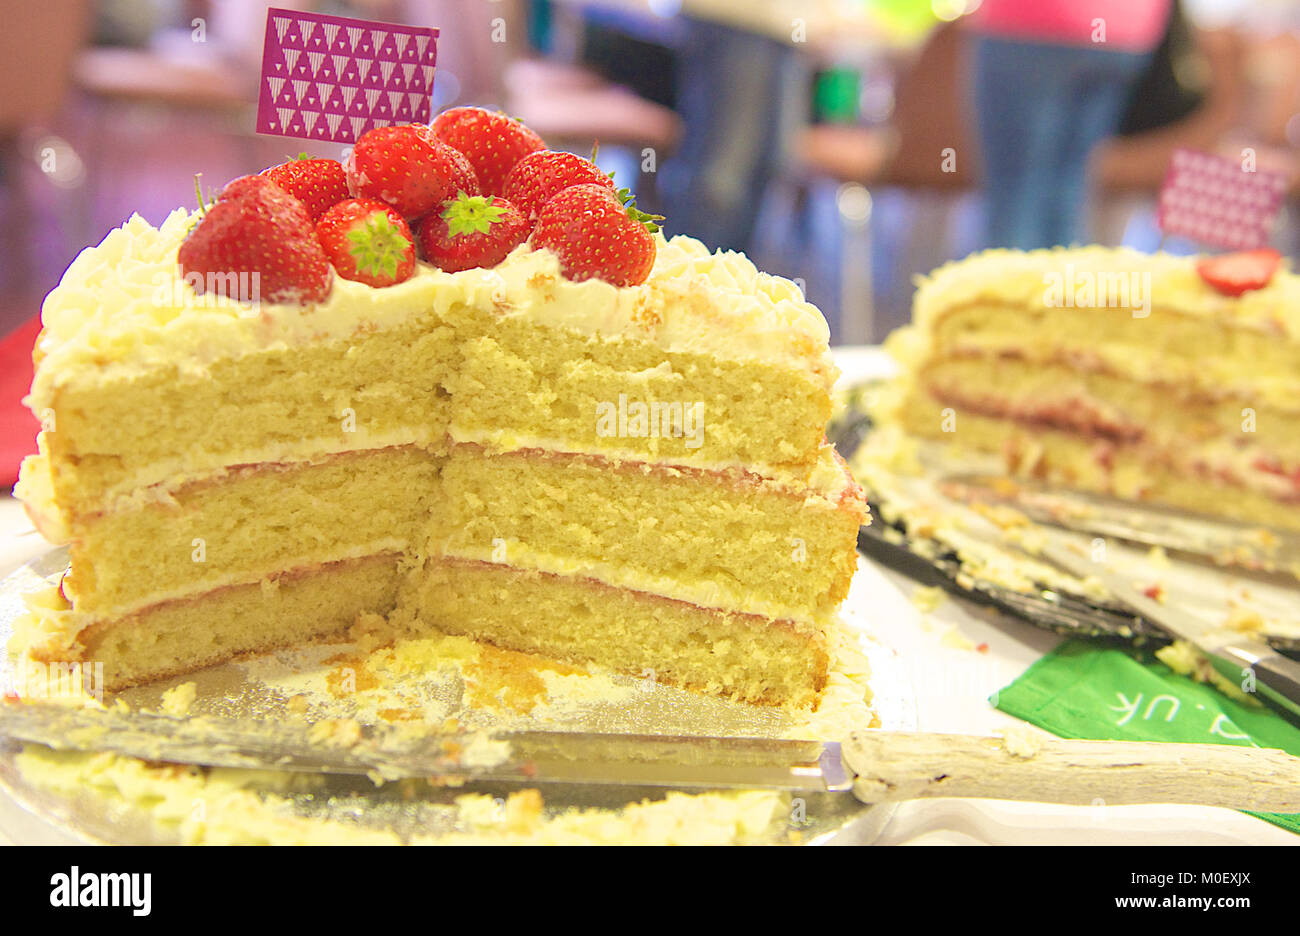 Close-up of a half eaten strawberry sponge cake at a cake fair Stock Photo